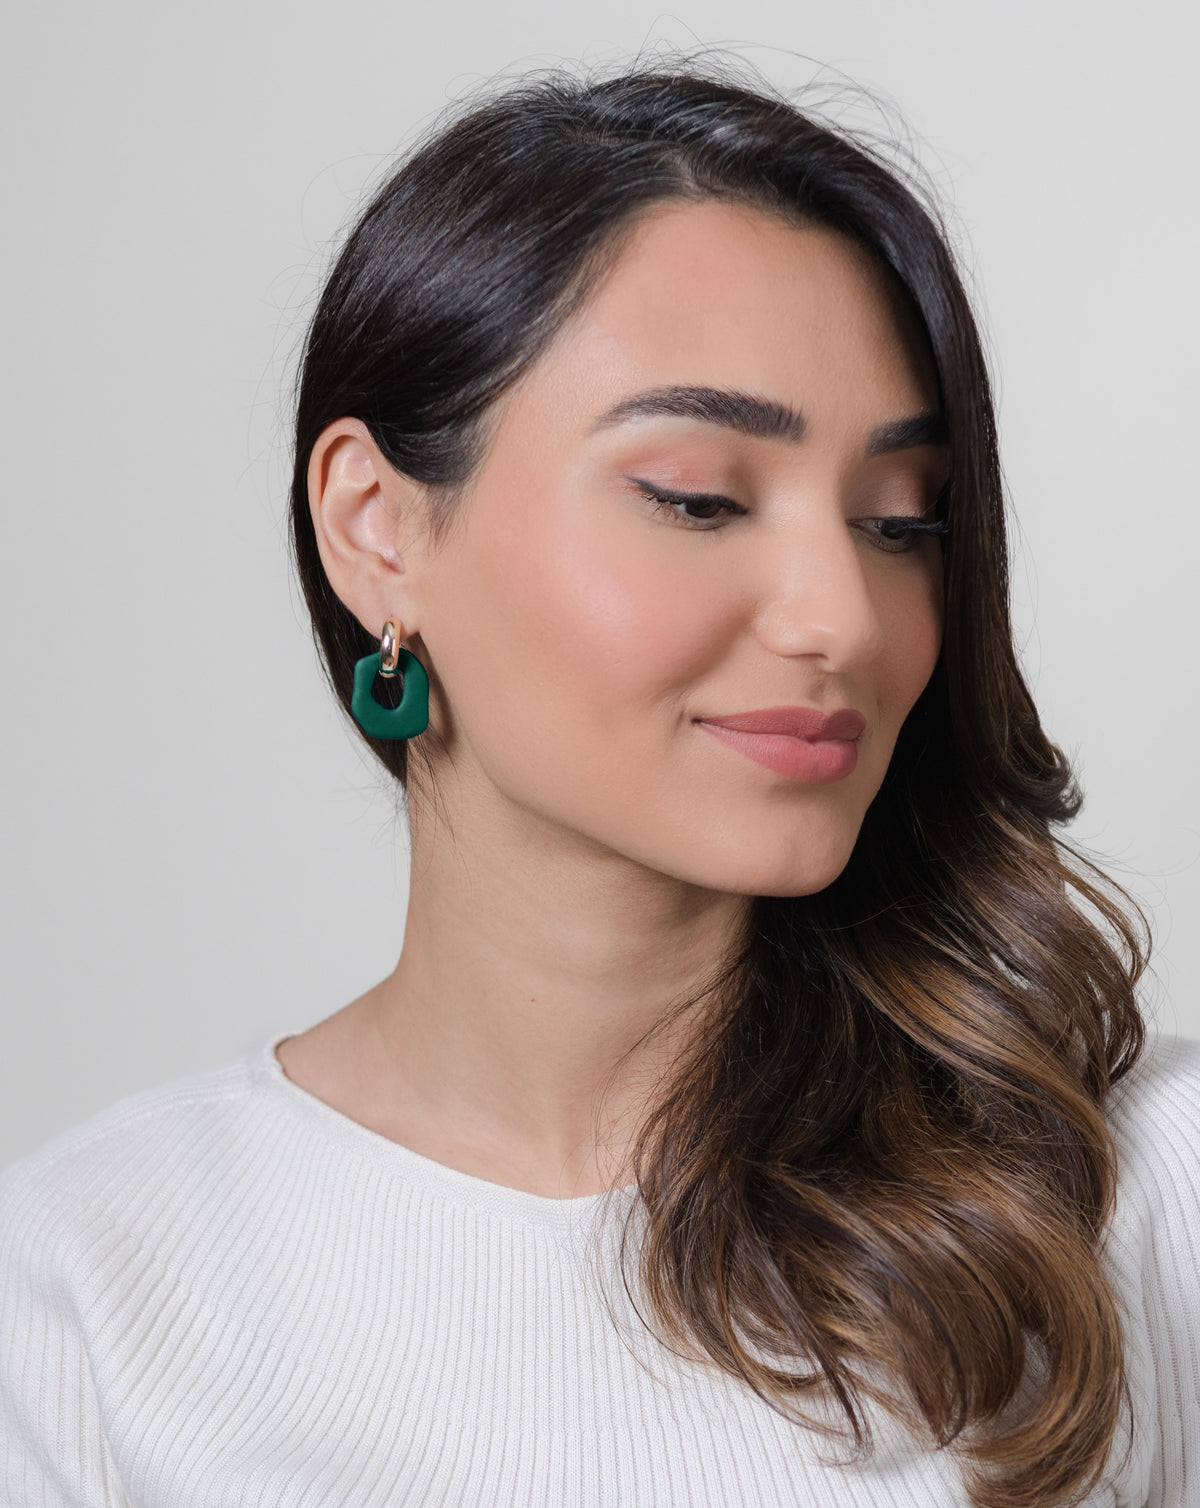 Darien earrings in Pine color with gold hoops, on model